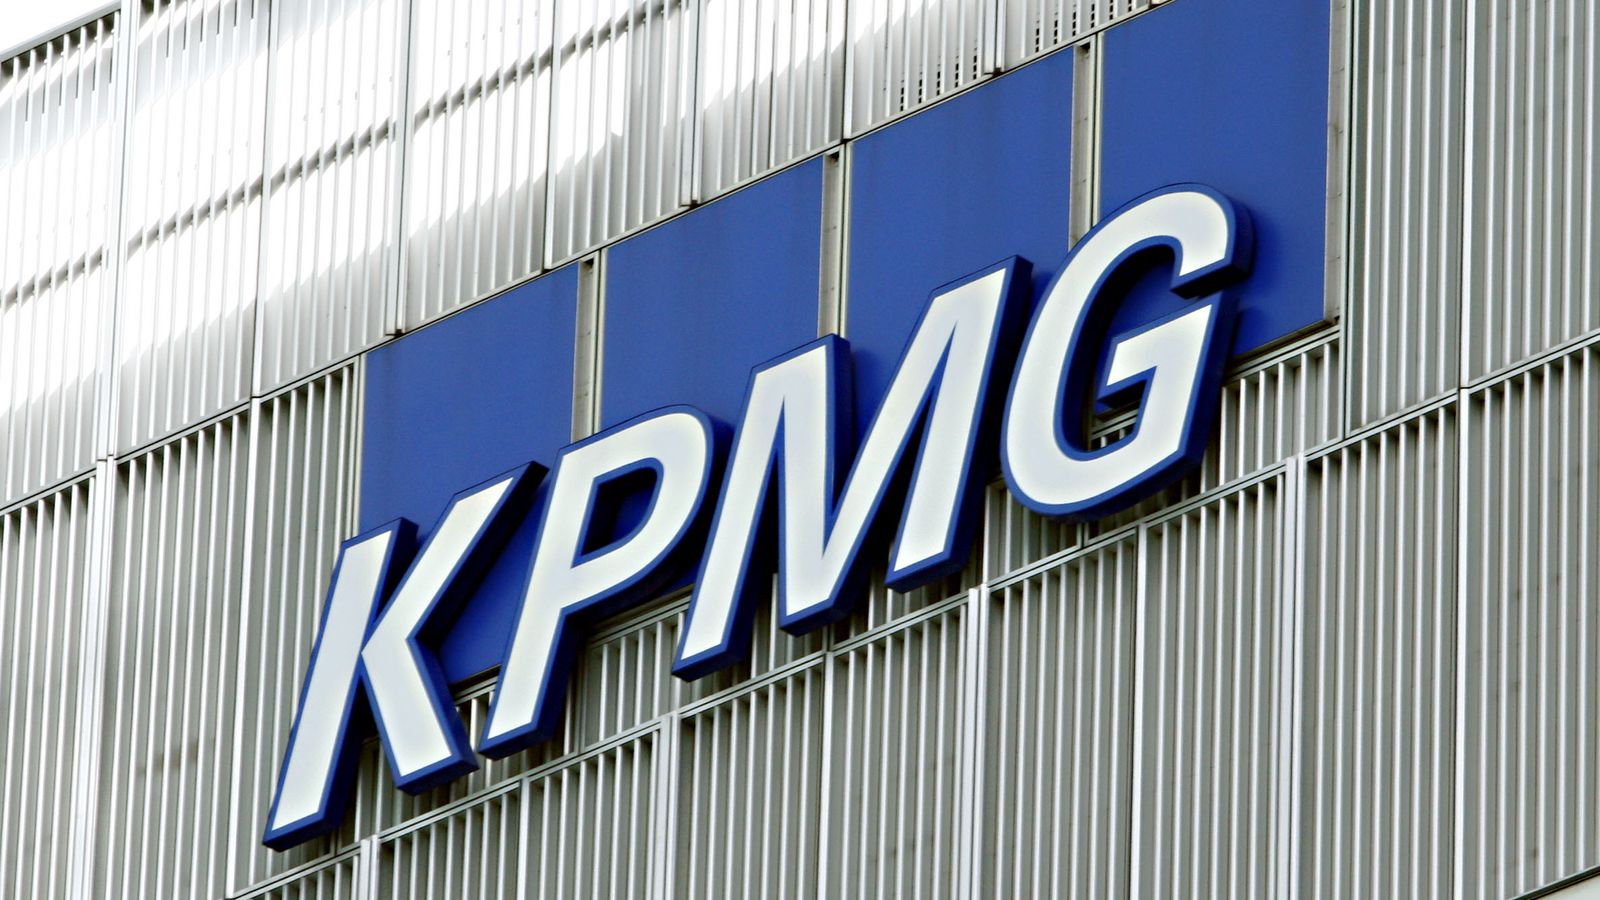 KPMG warns British corporate giants of big hike in audit fees